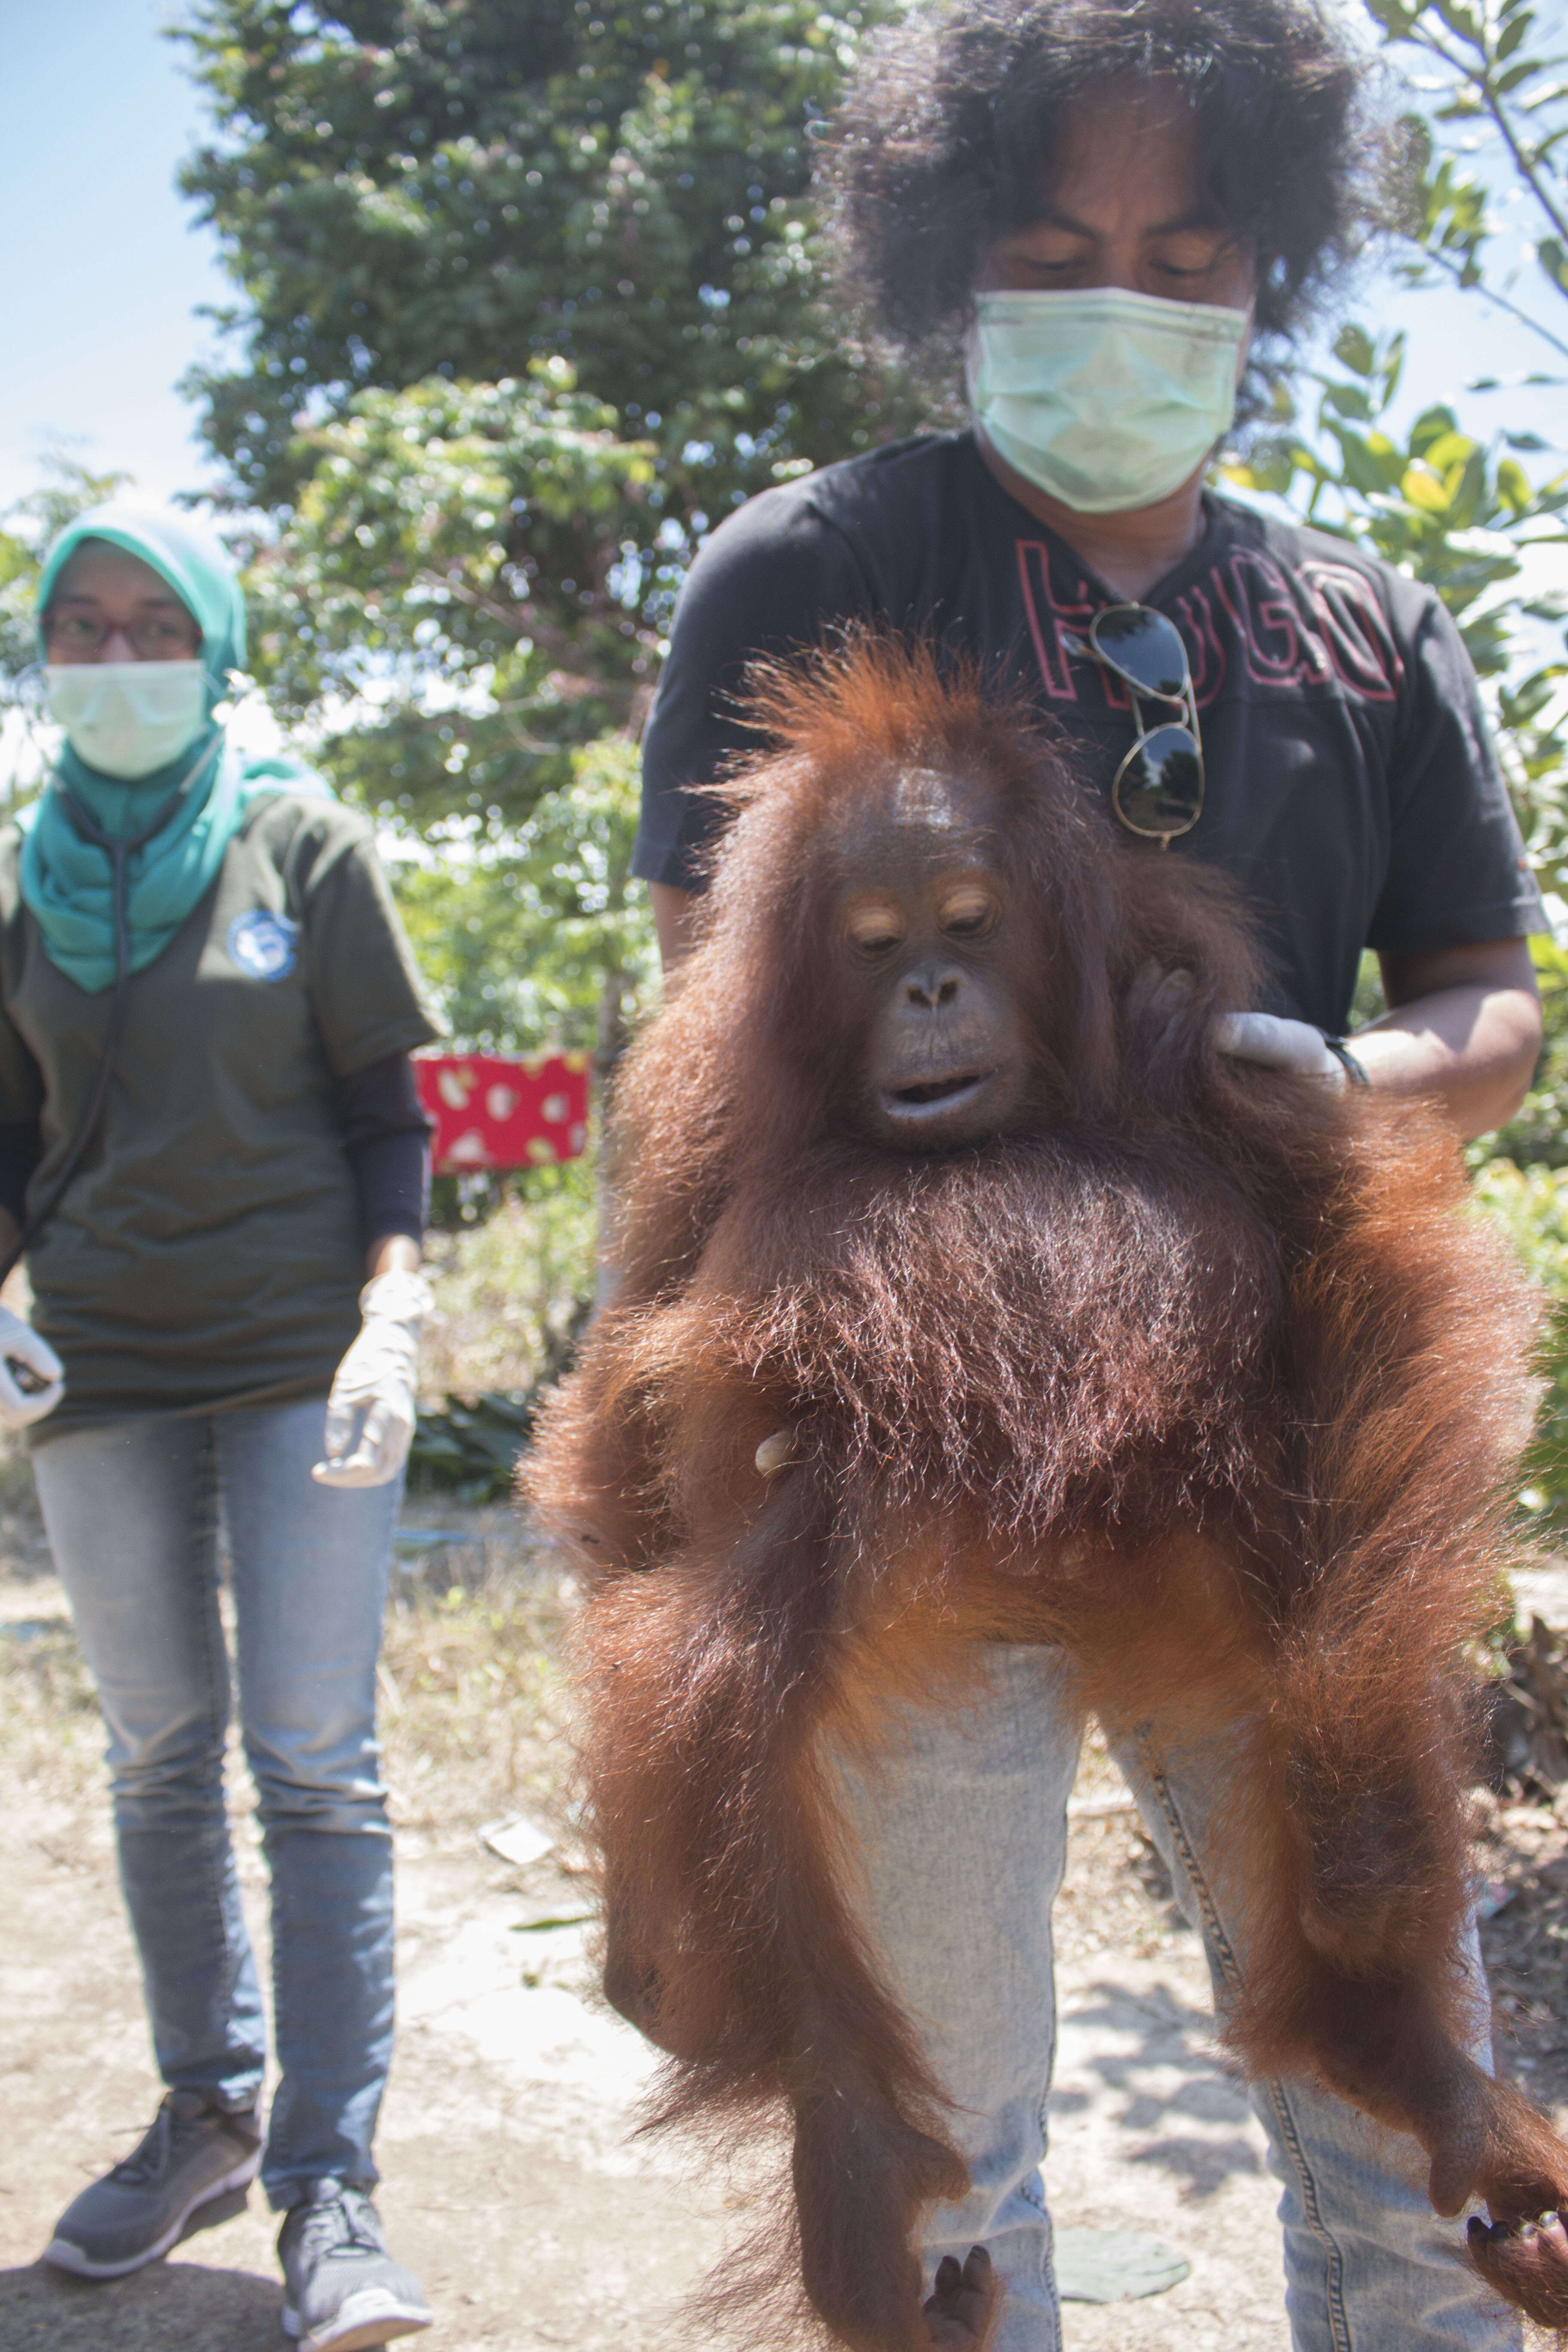 People holding rescued orangutan